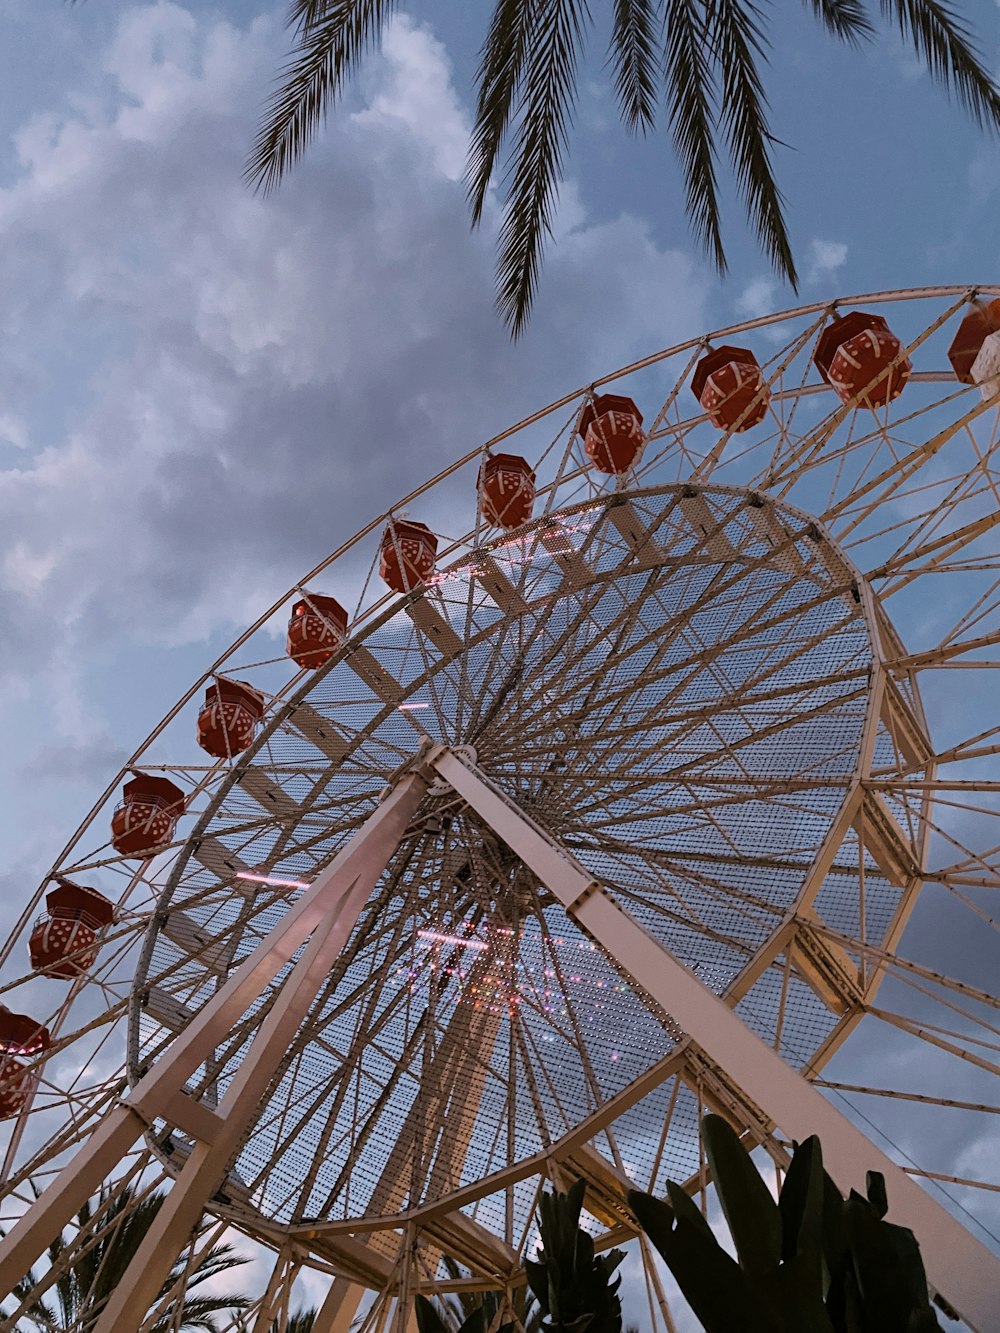 a ferris wheel with a cloudy sky